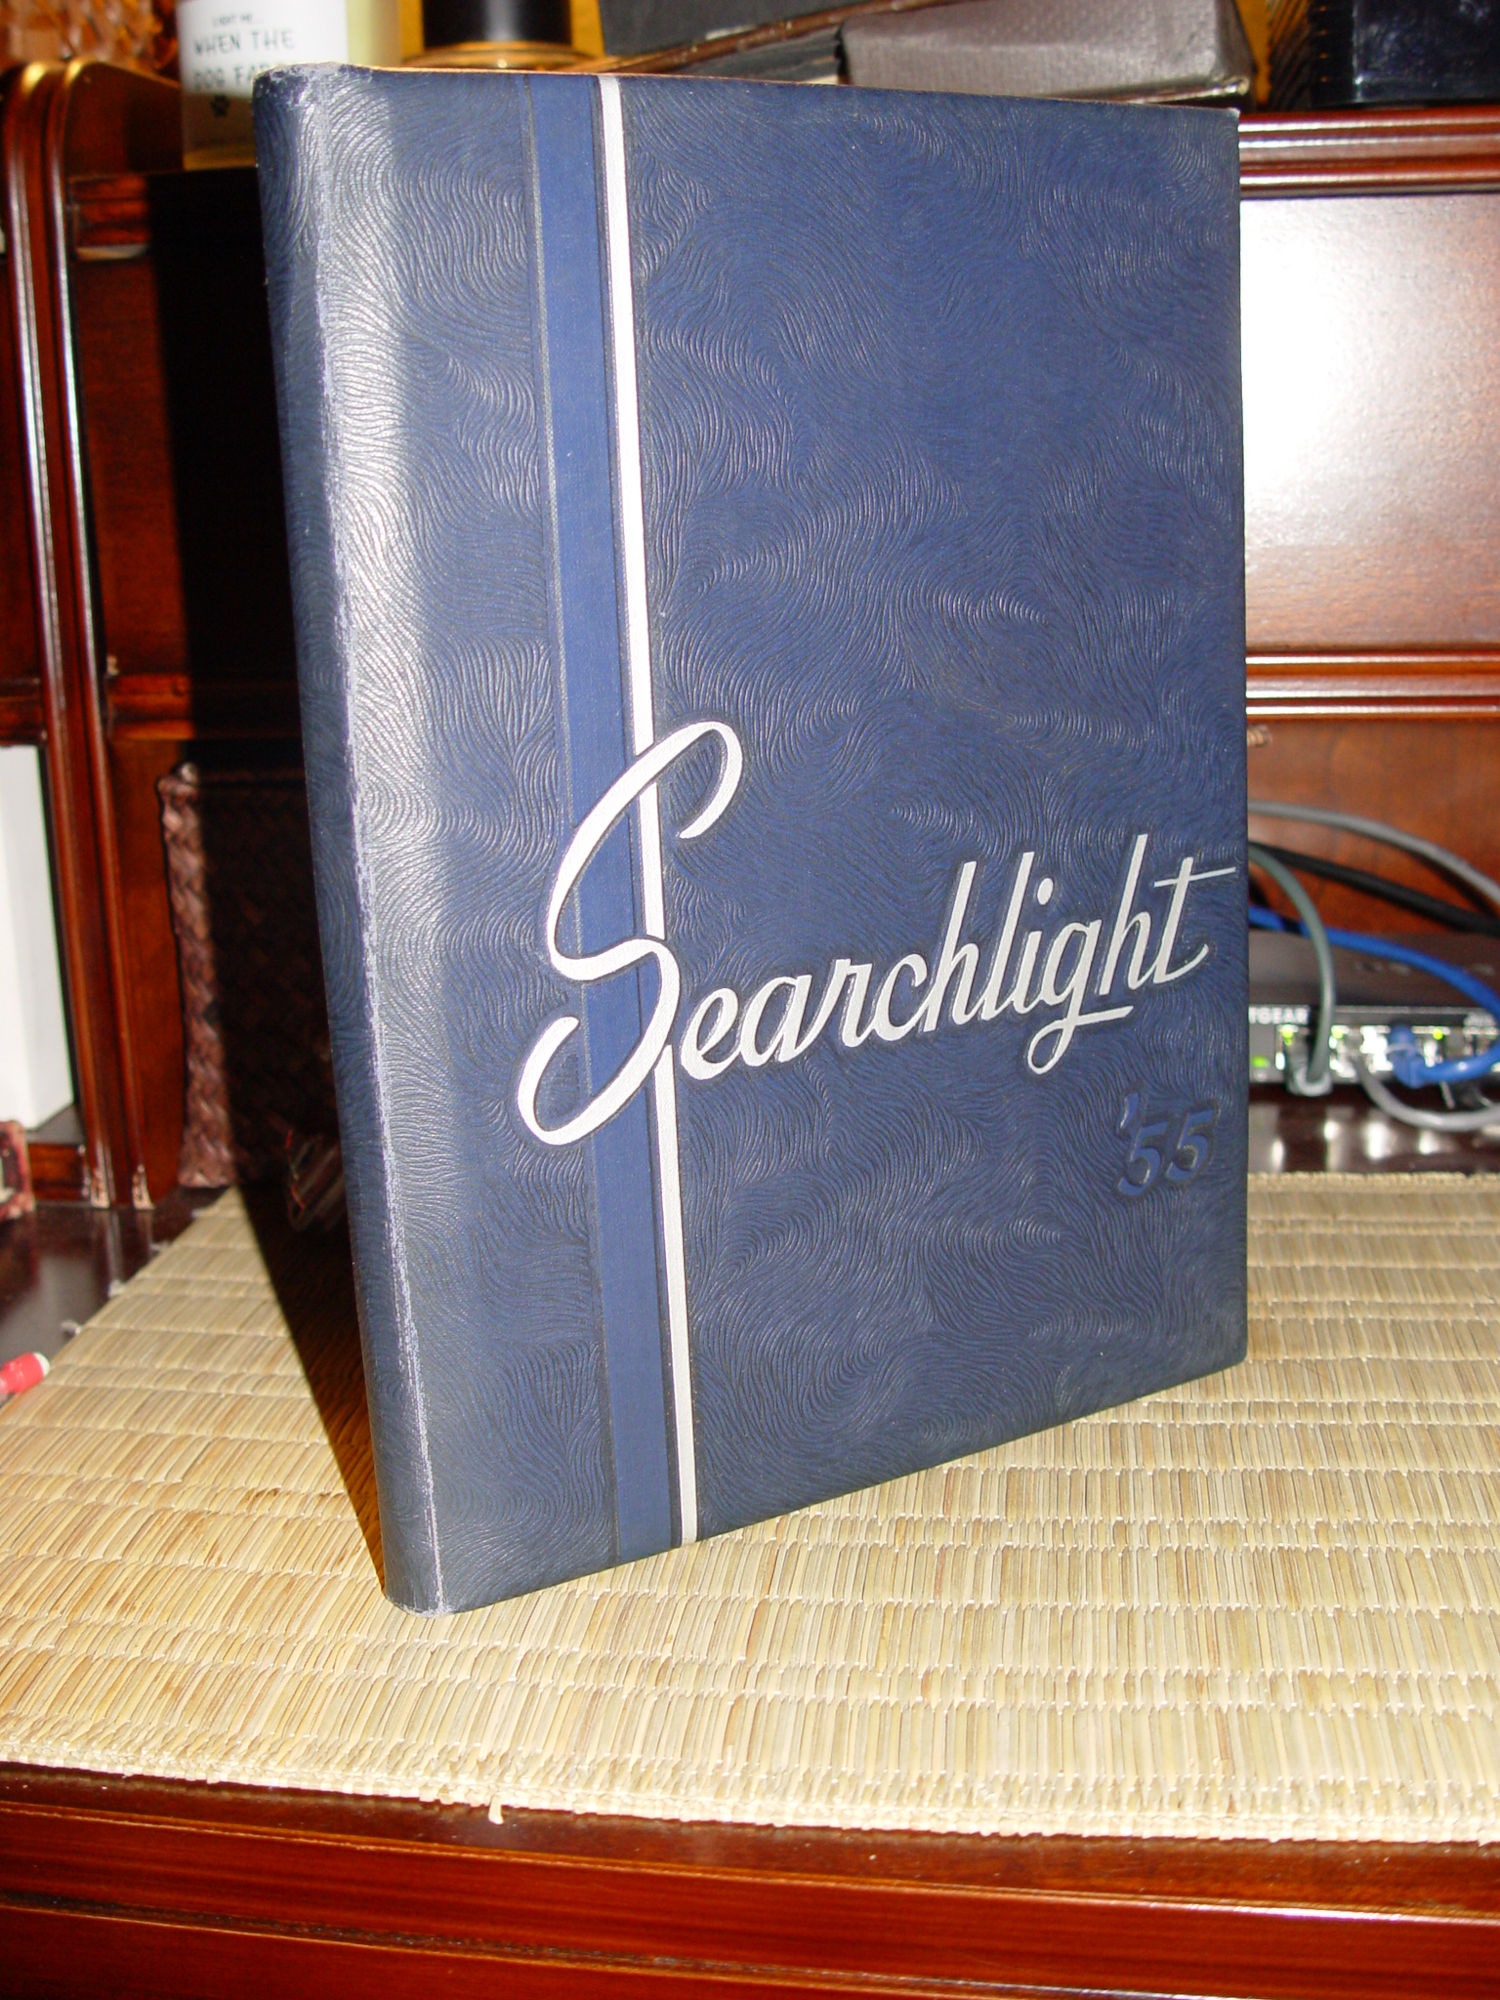 1955 Searchlight
                        Yearbook, Minot North Dakota Senior High School